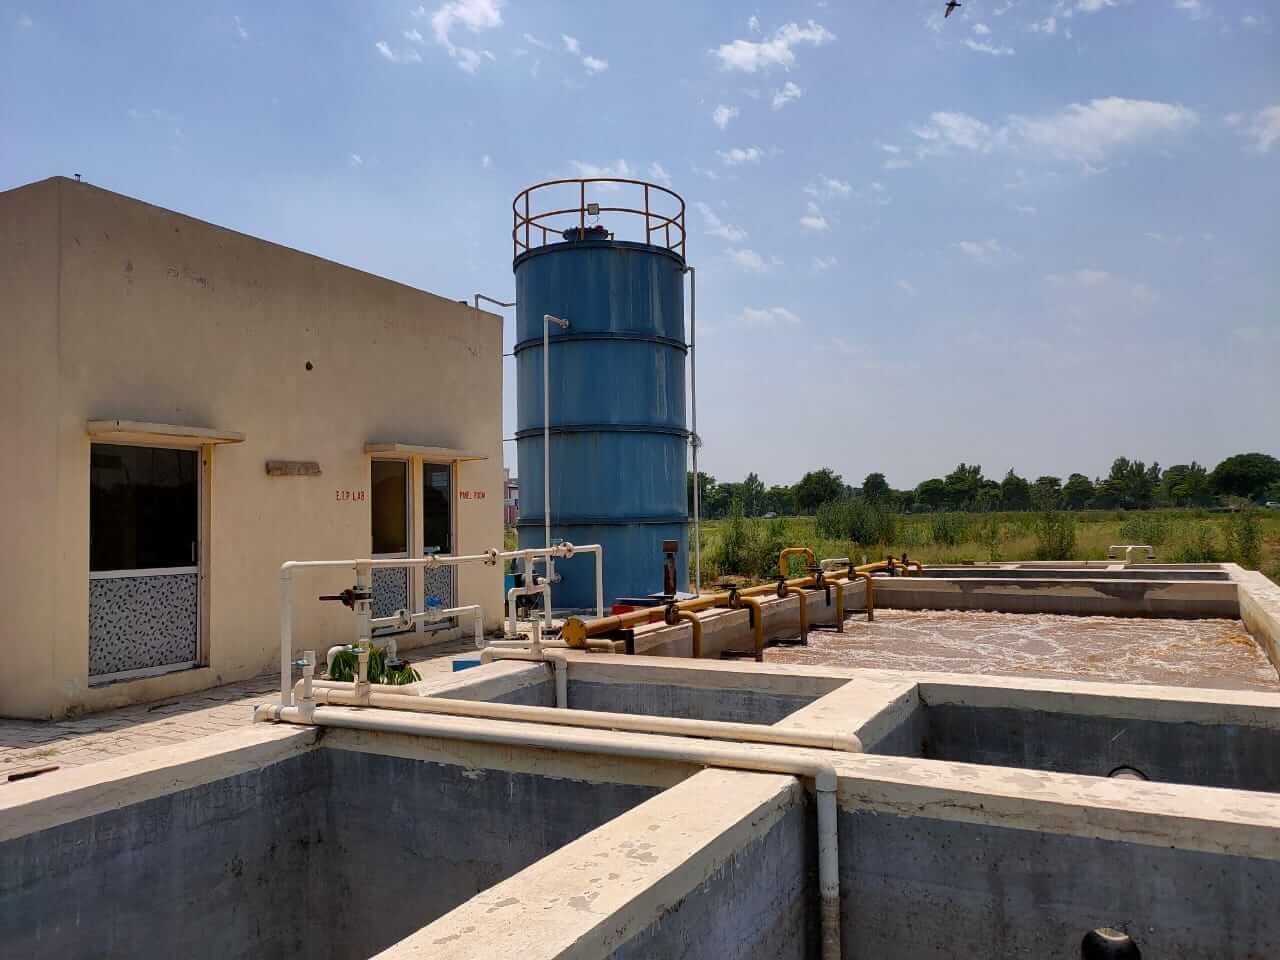 IDMC Ludhiana, Punjab Dairy ETP